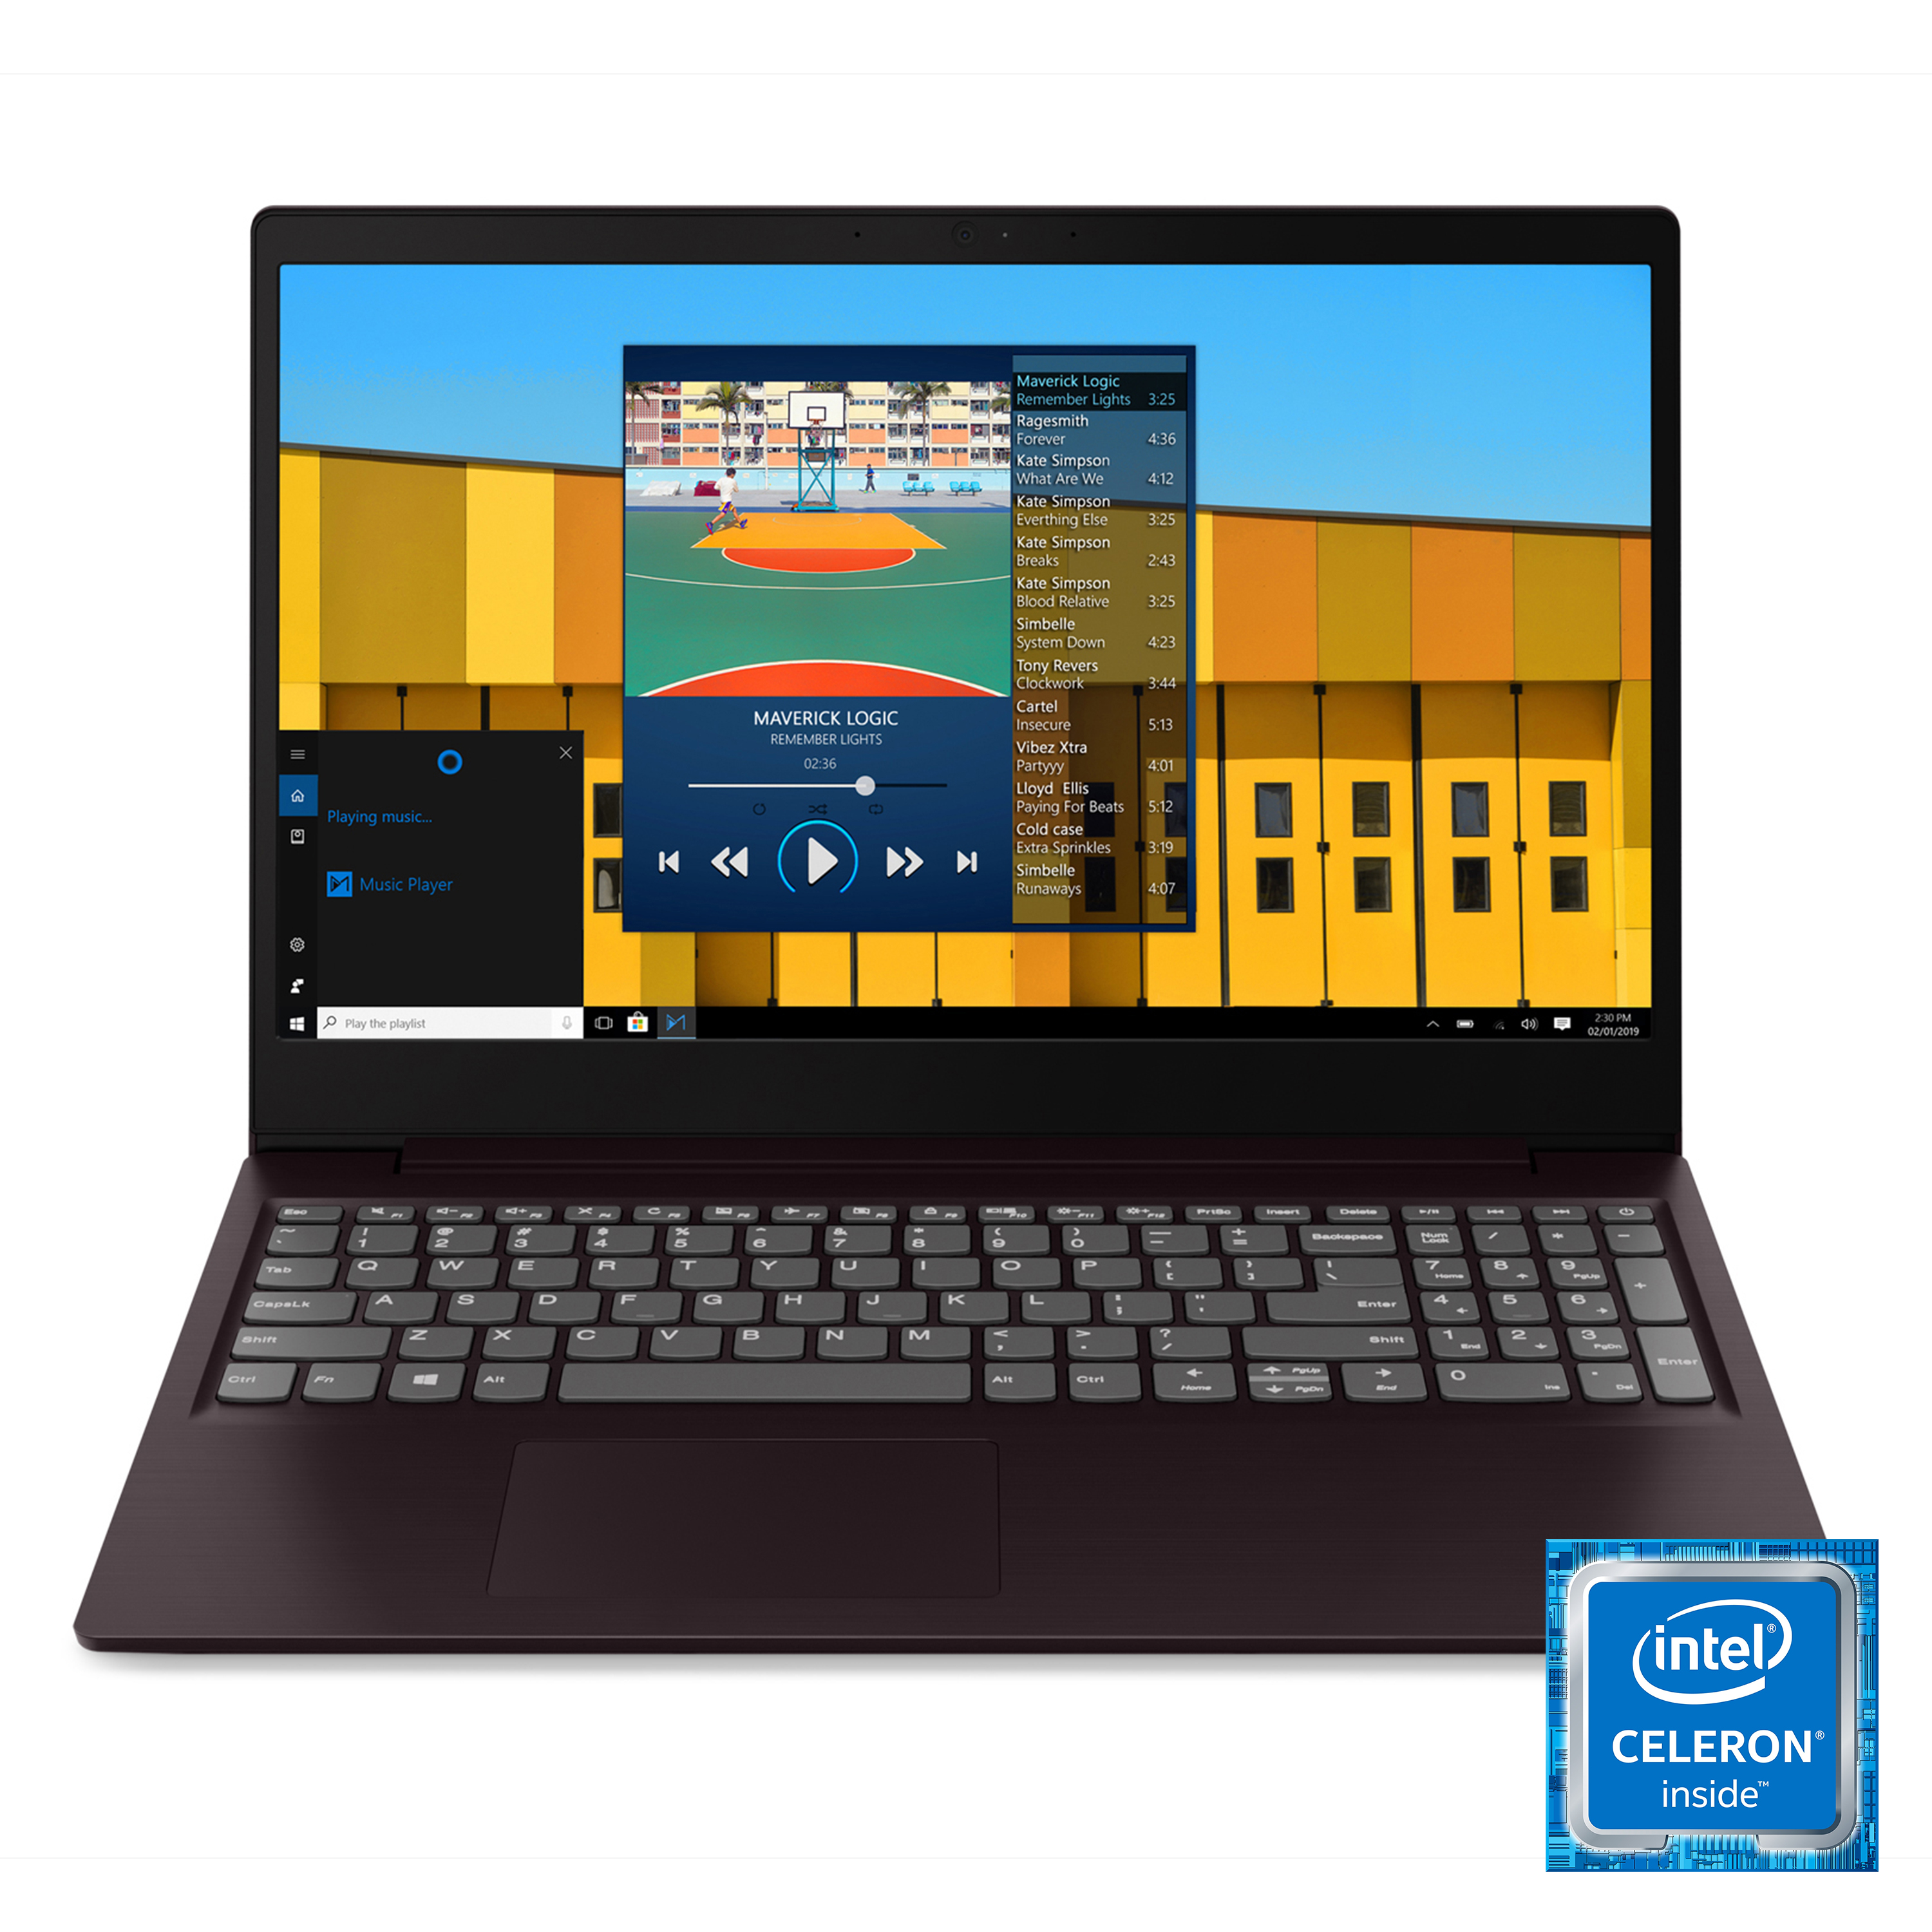 Lenovo ideapad S145 15.6" Laptop, Intel Celeron 4205U Dual-Core Processor, 4GB Memory, 128GB Solid State Drive, Windows 10 - Dark Orchid - 81MV00MAUS - image 1 of 14